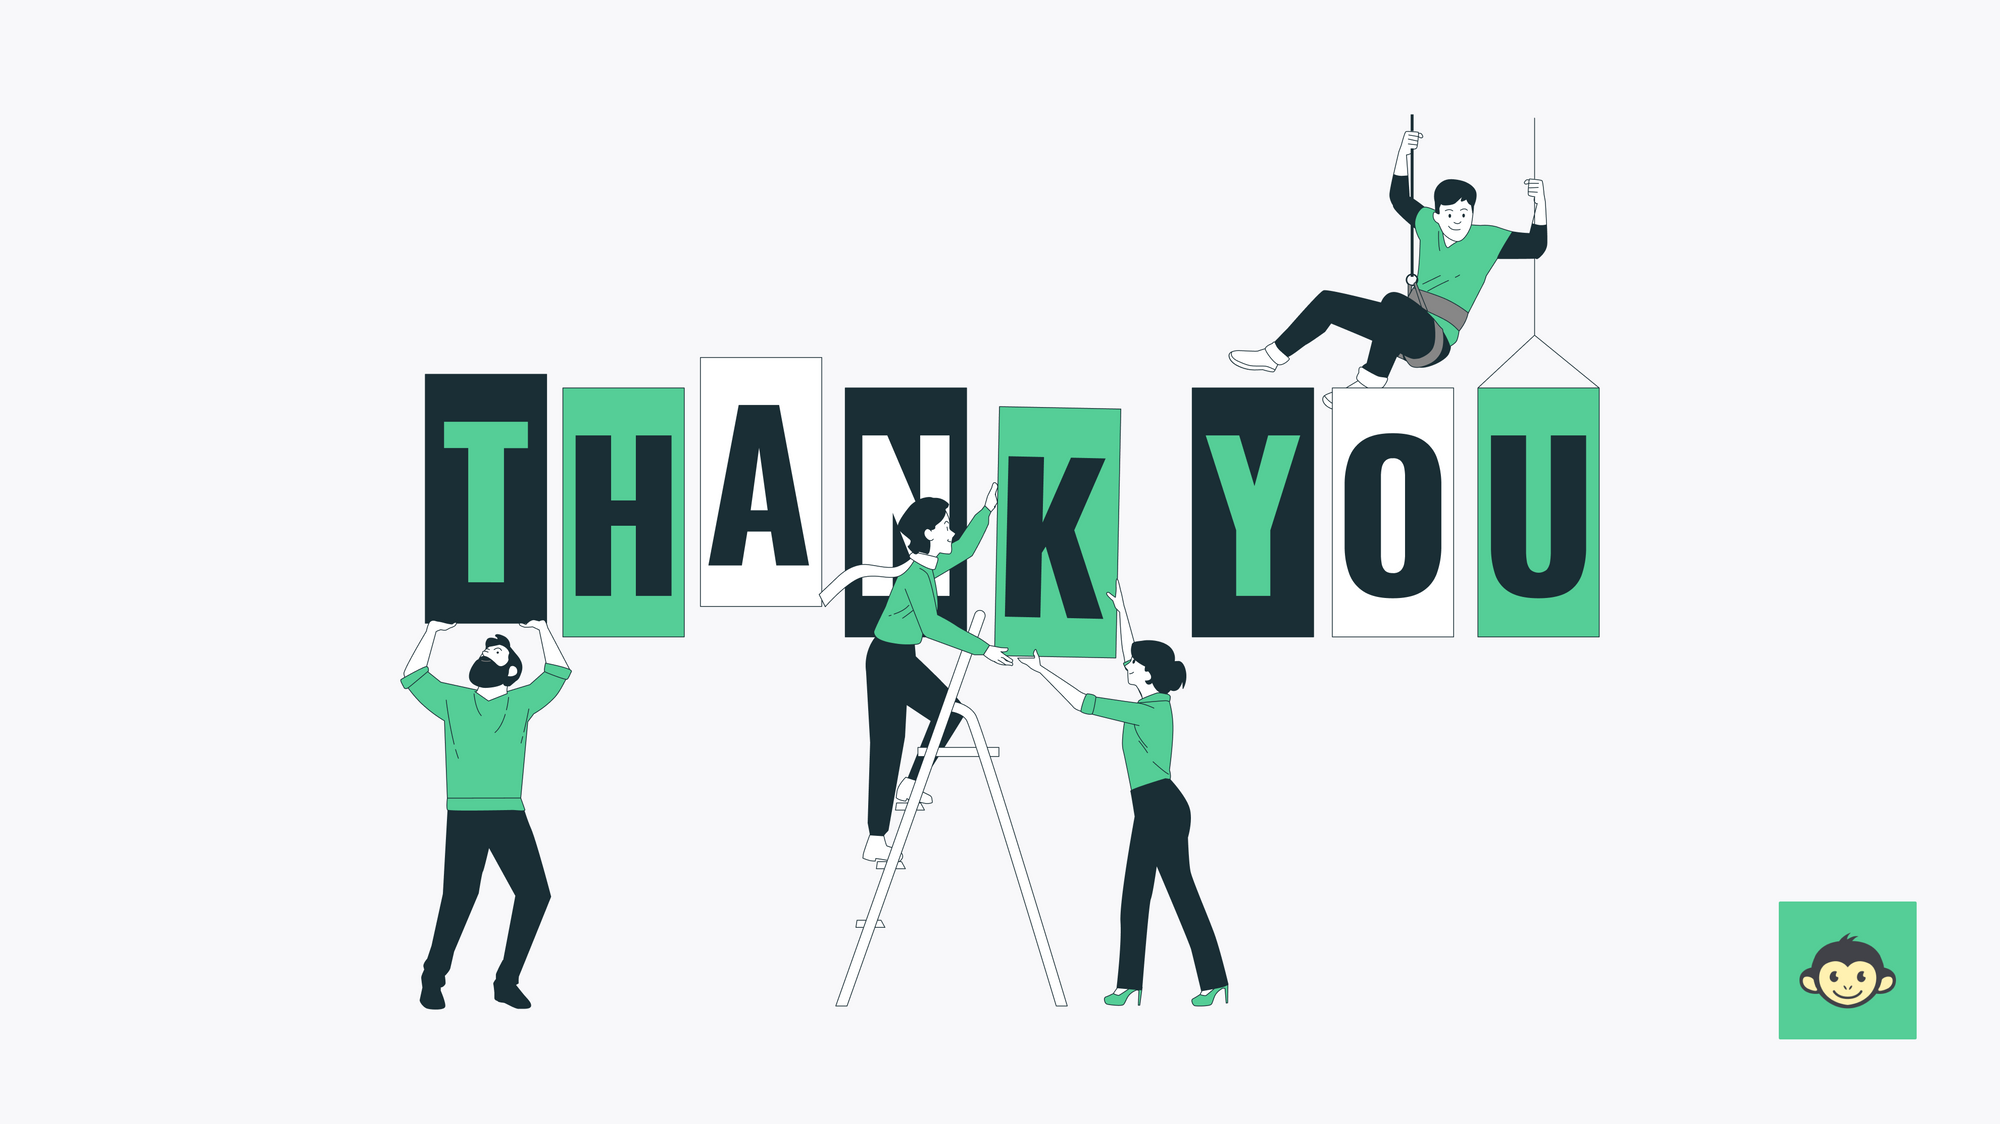 Thank you for all you do: 100+ ways to express gratitude